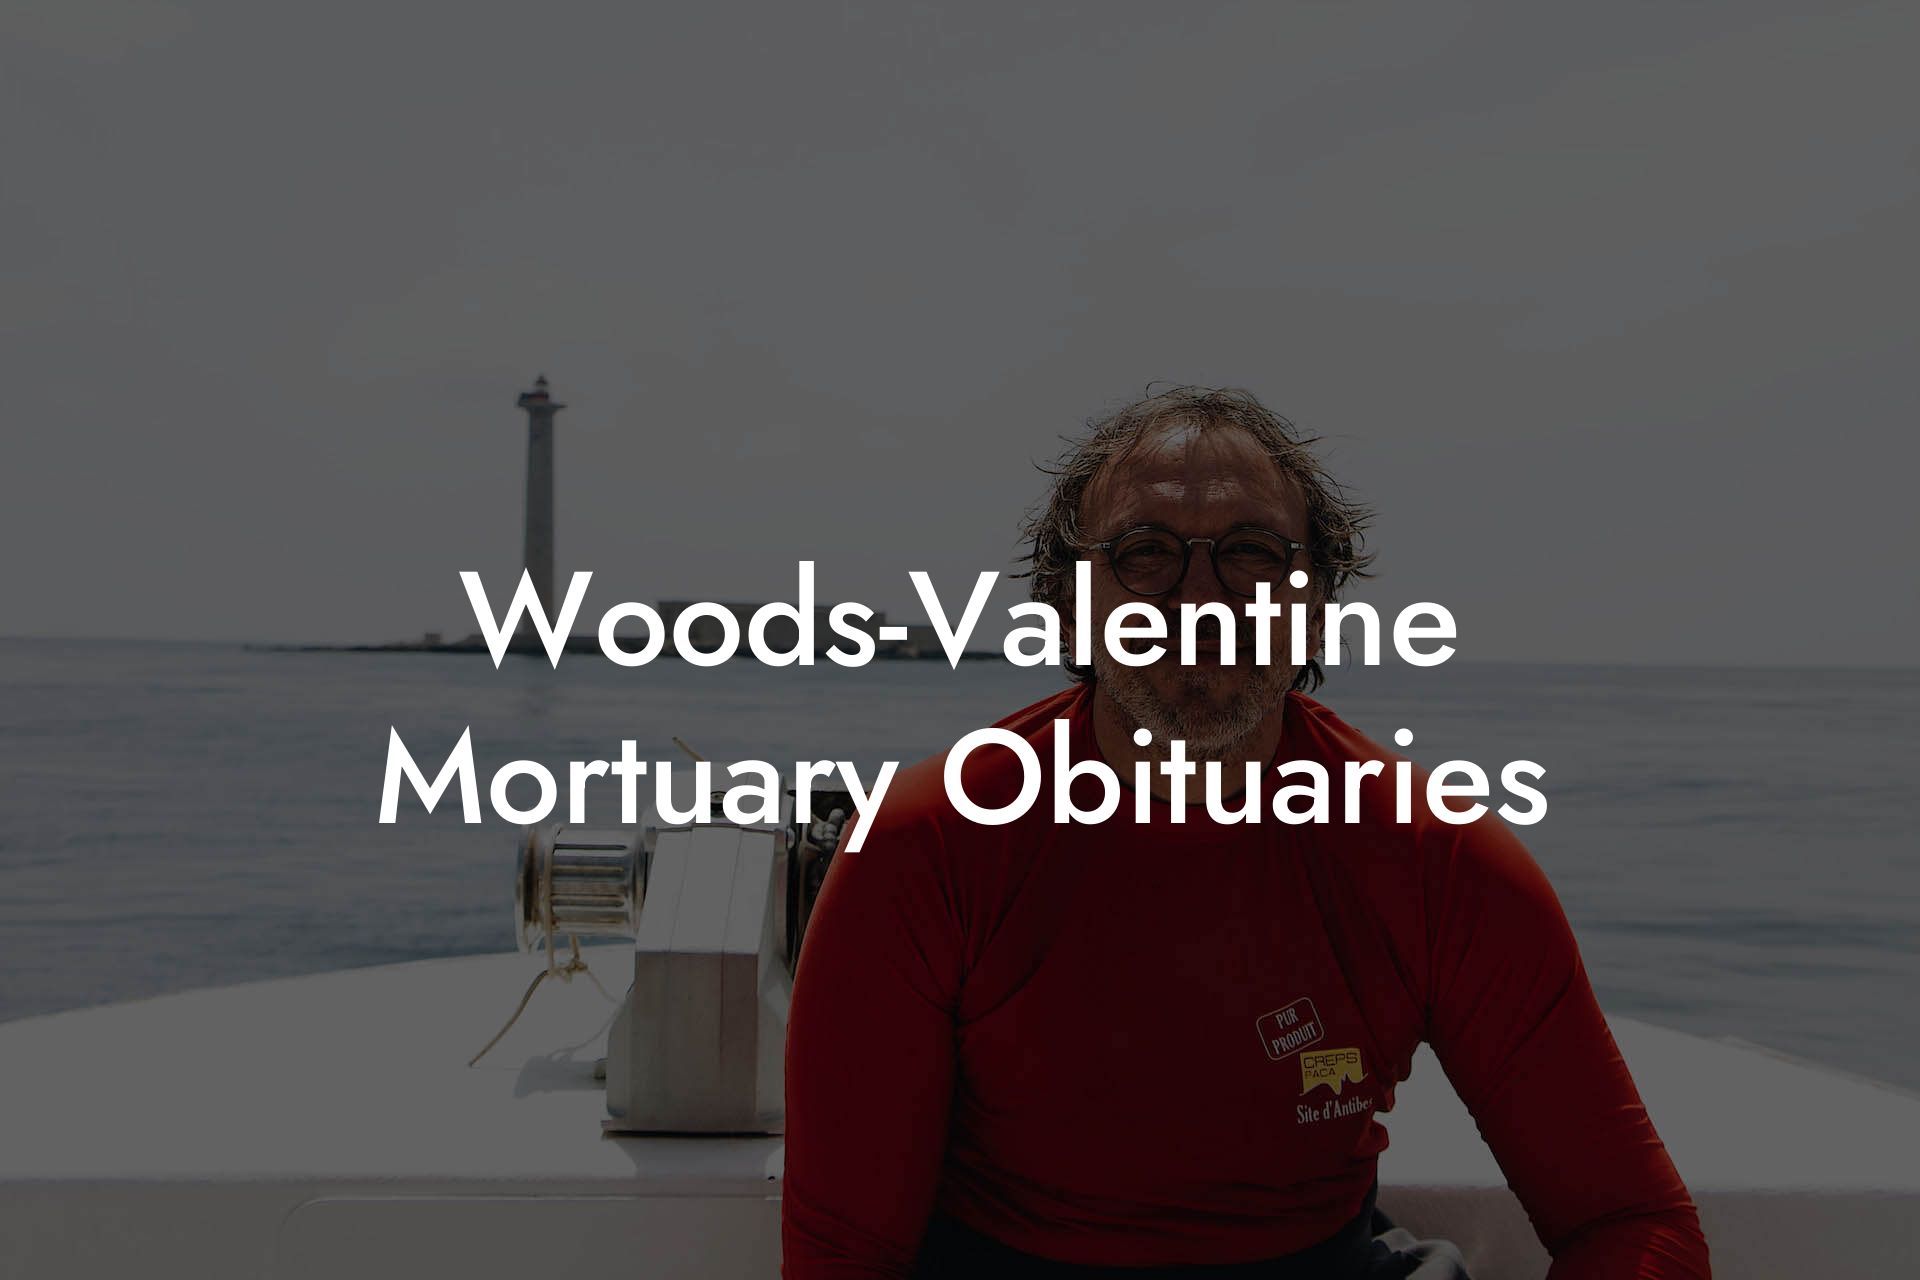 Woods-Valentine Mortuary Obituaries